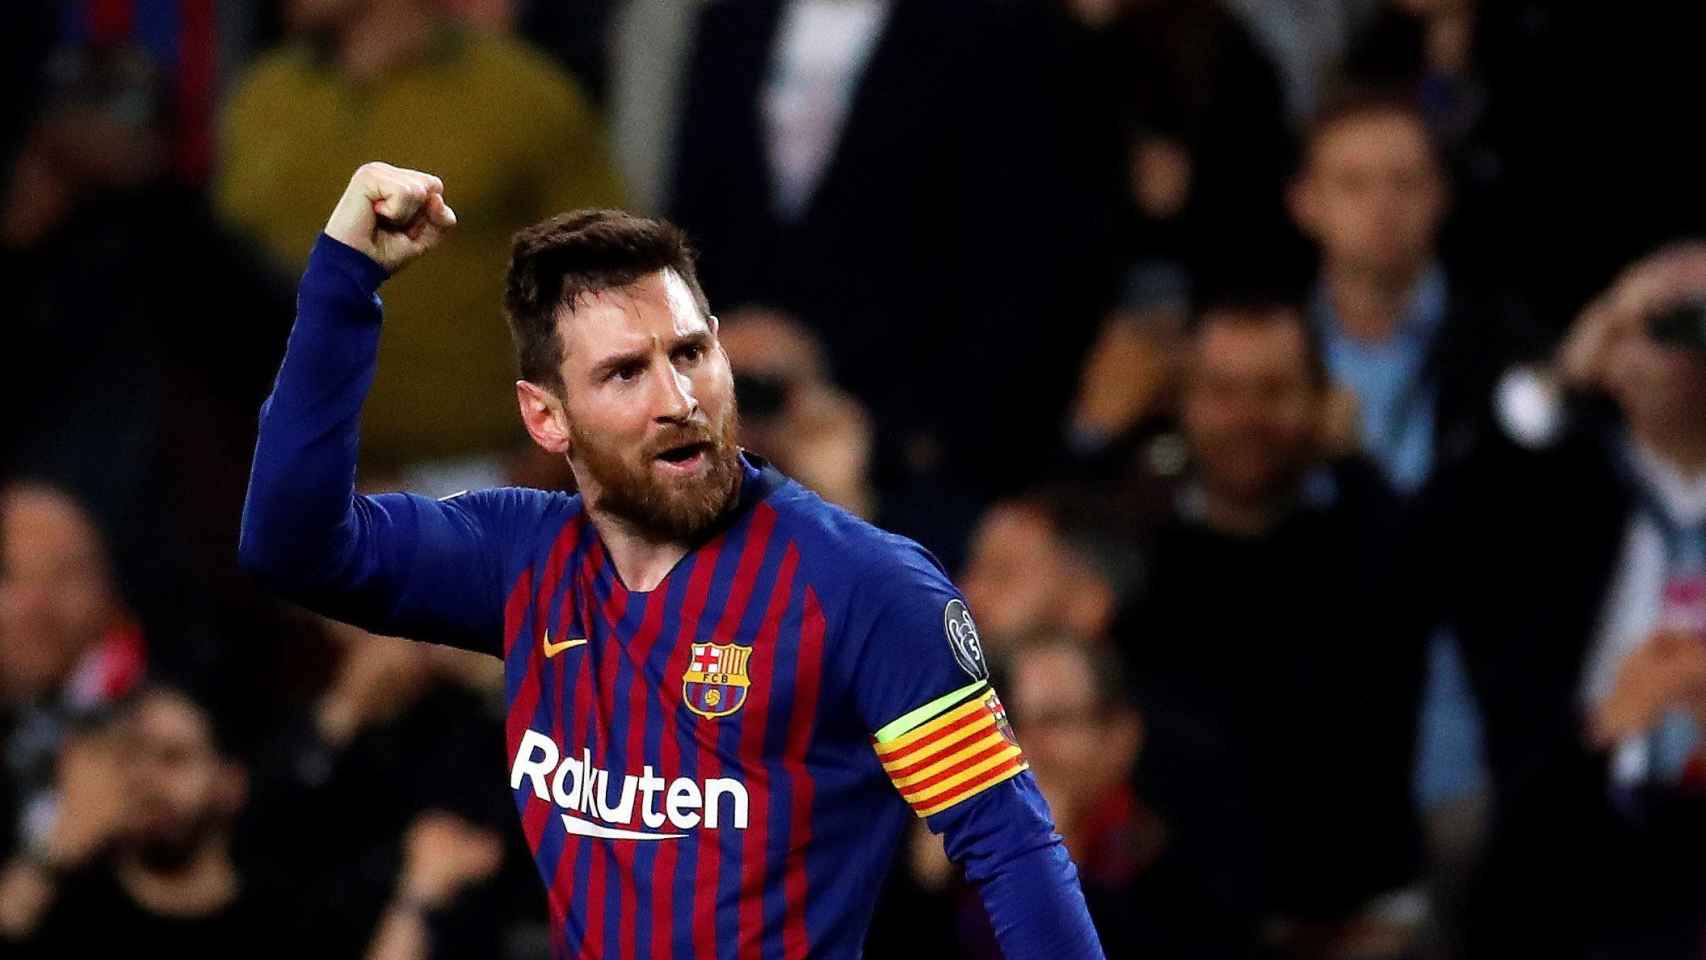 Leo Messi celebra su primer gol frente al Liverpool / EFE